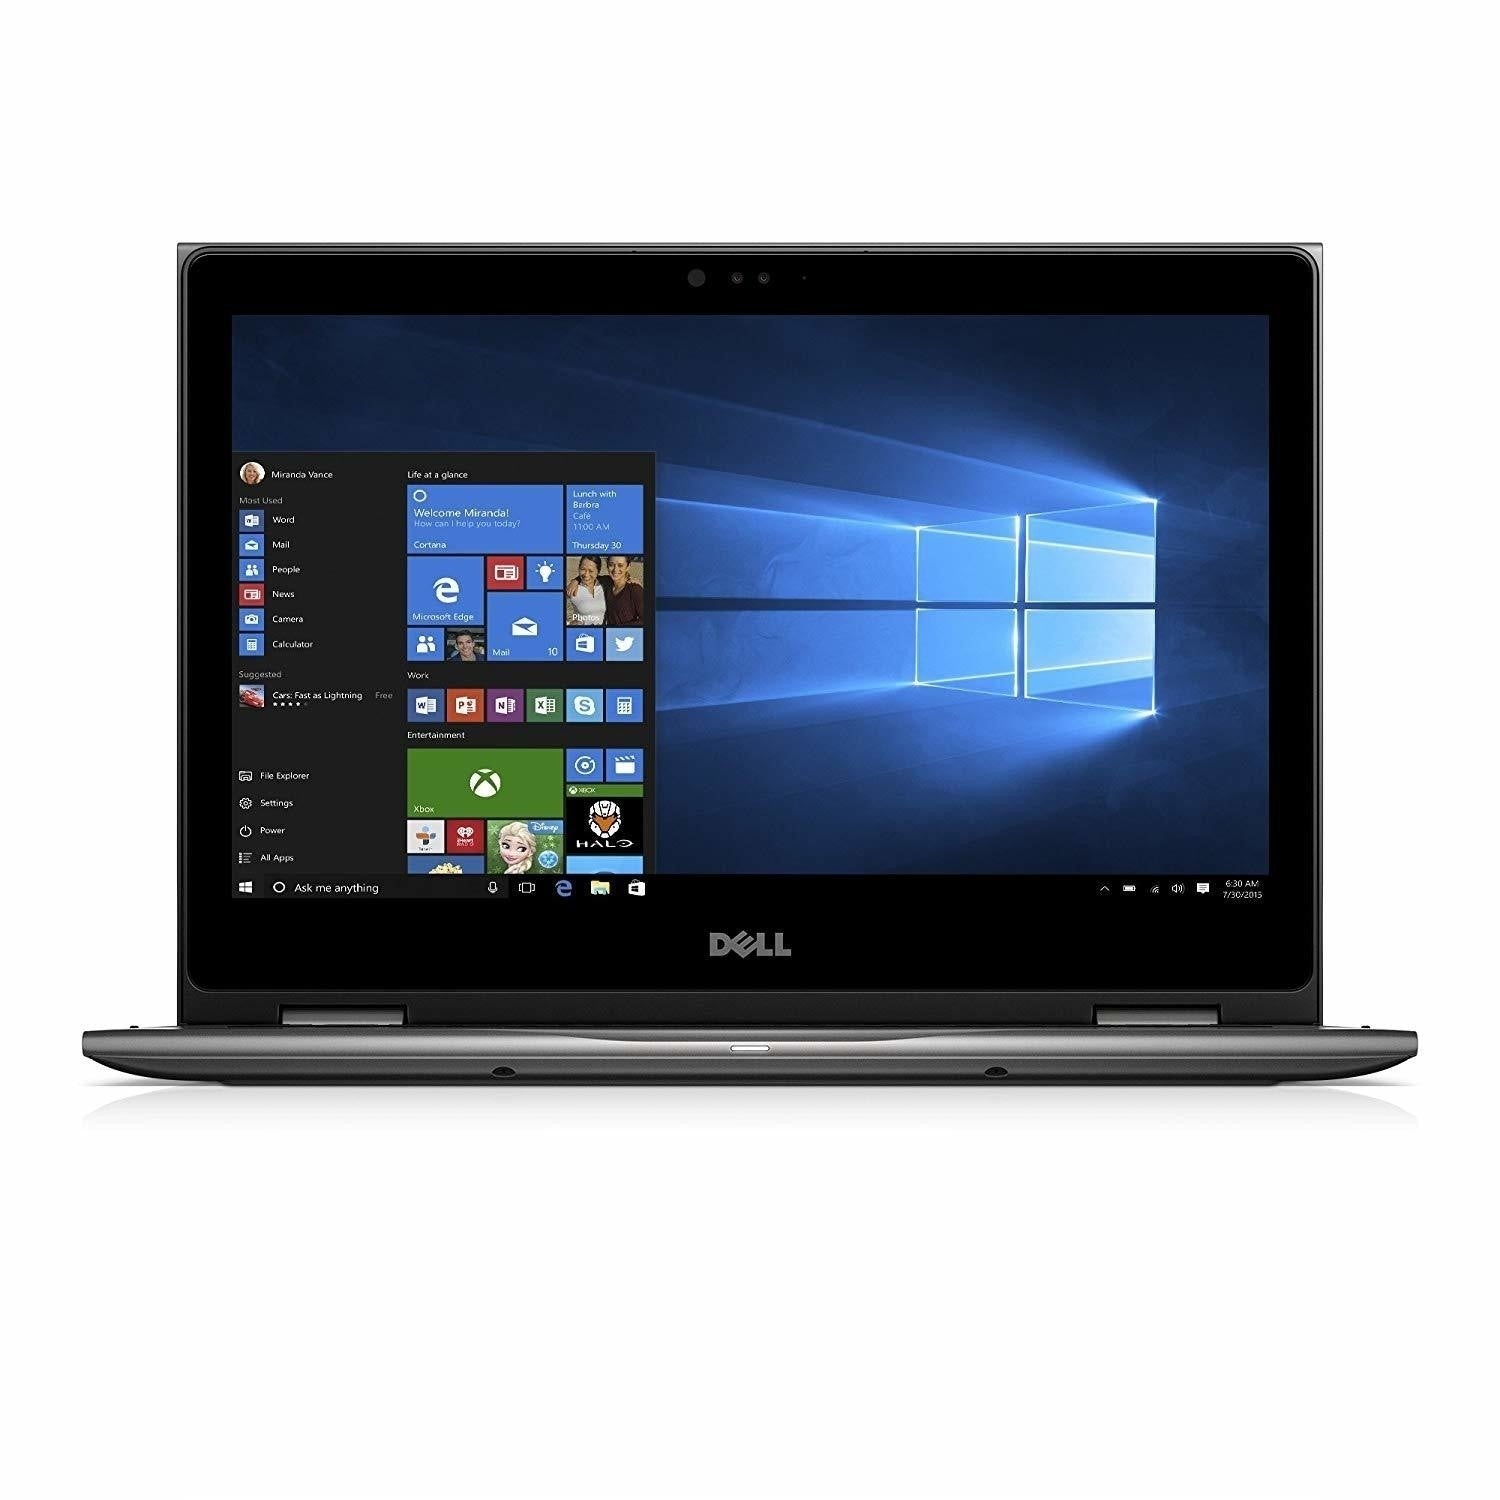 Dell Inspiron 13 5378 Laptop Intel Core i7-7500U 8GB RAM 256GB SSD 13.3” Silver - Refurbished Excellent